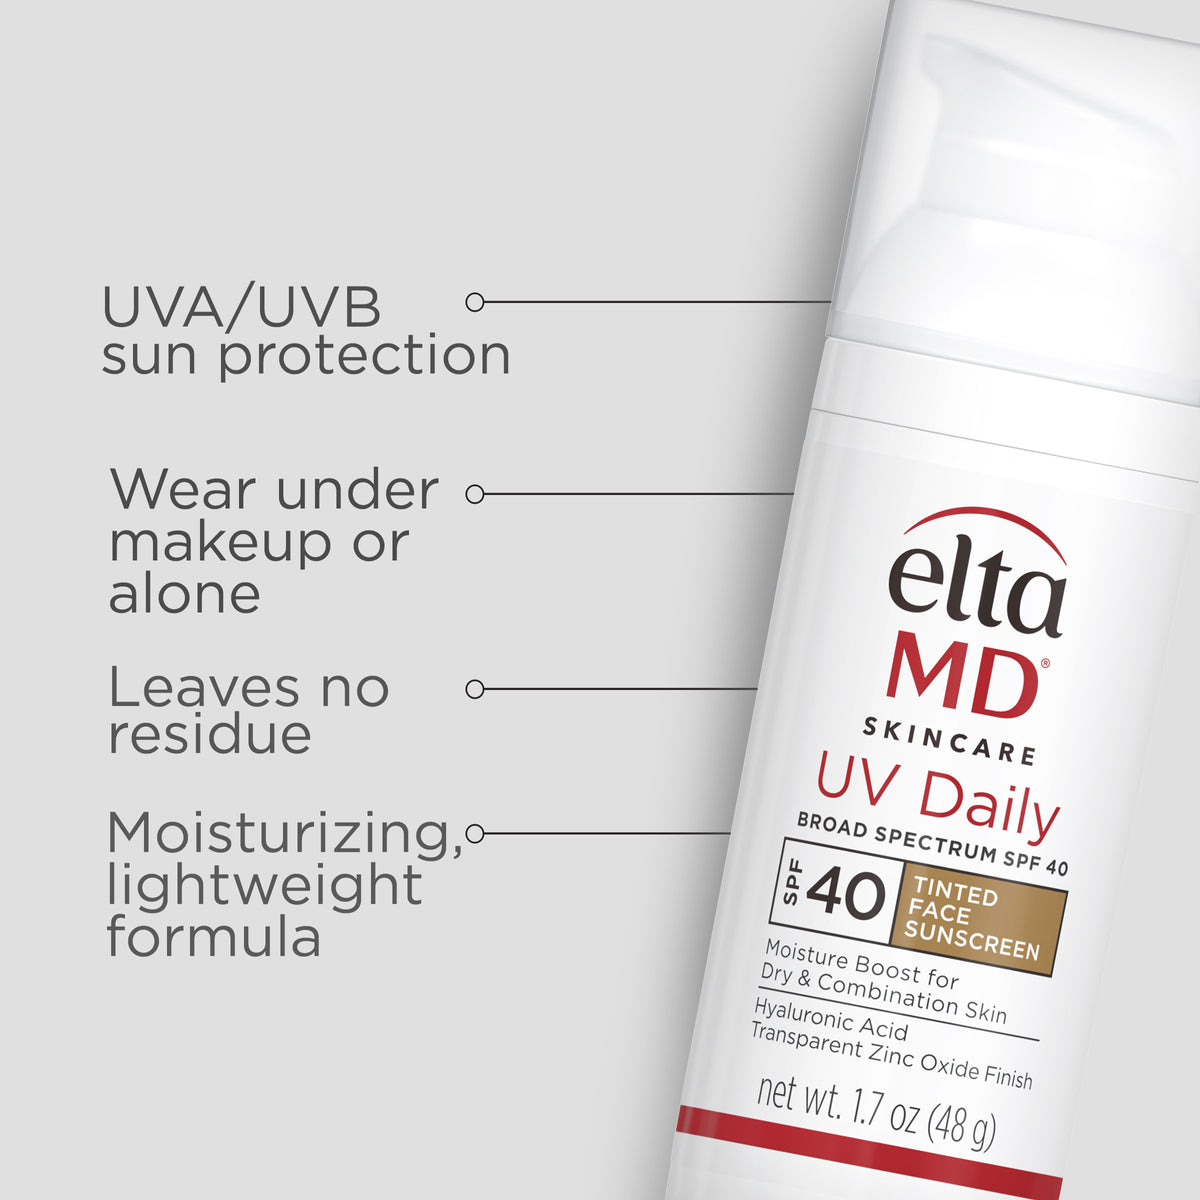 eltaMD UV daily tinted: a sunscreen SPF 40